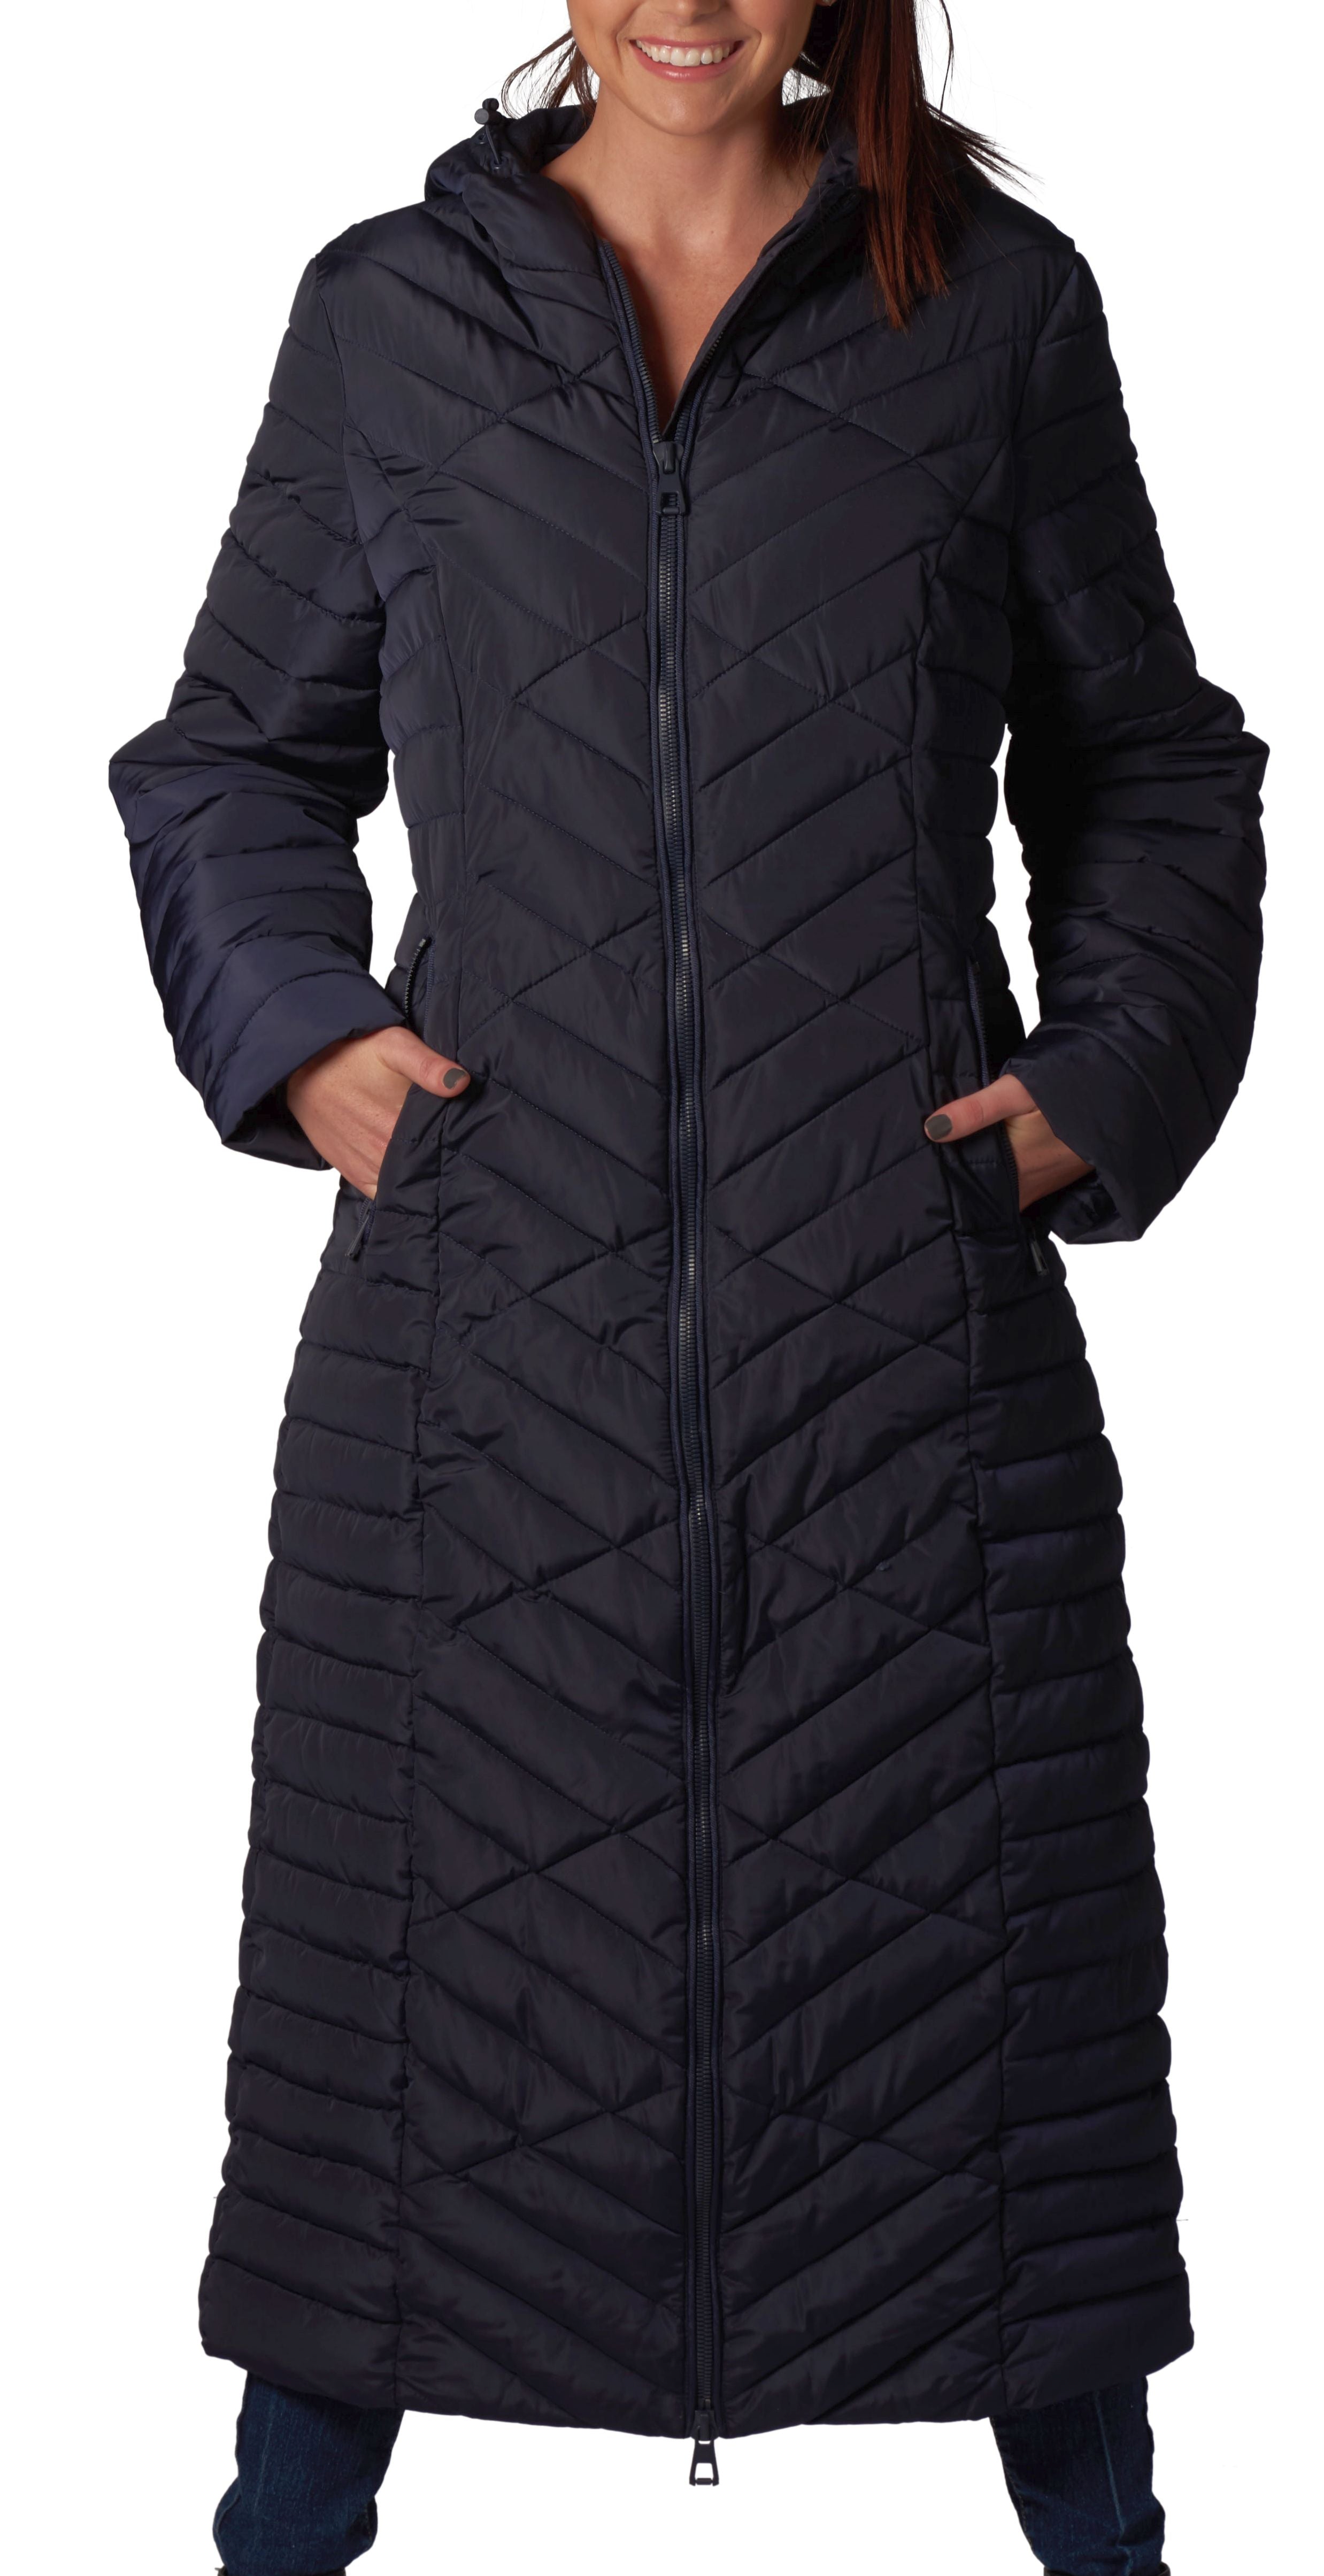 Affordable Winter Coats, Vests & Jackets | The Whole Shebang